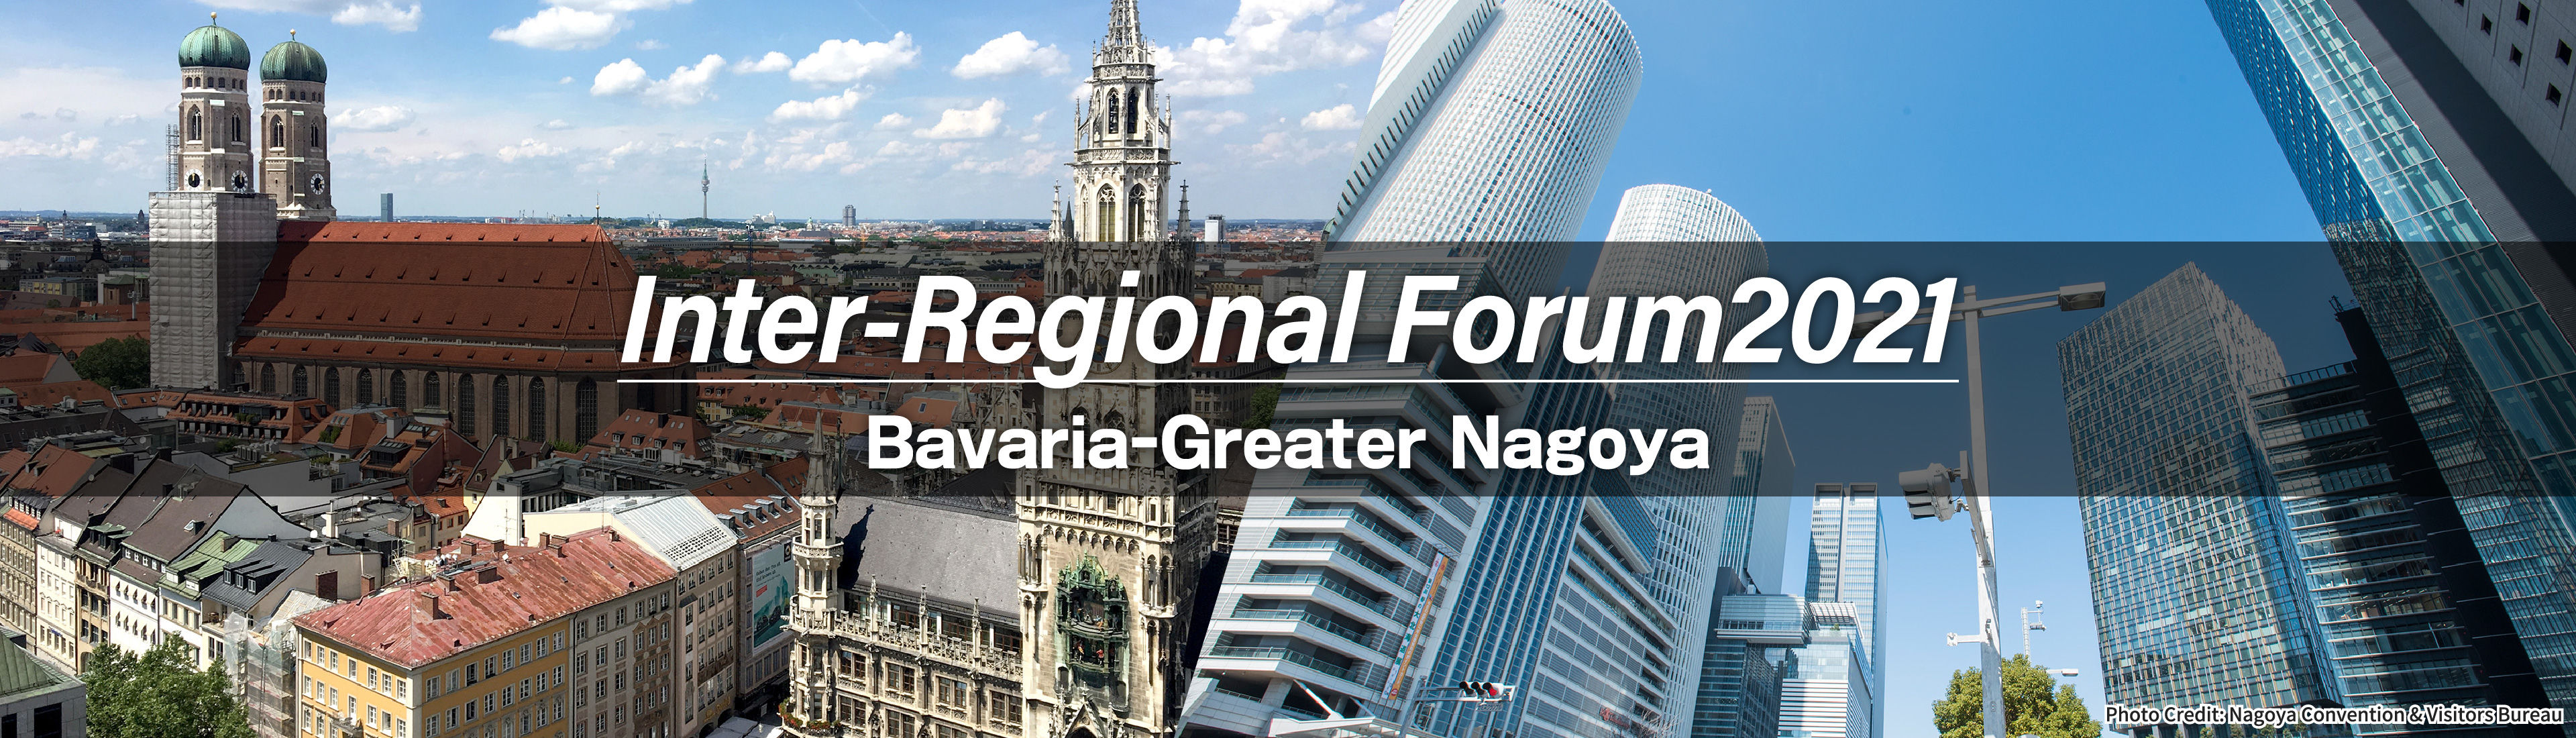 Inter-Regional Forum2021 Bavaria-Greater Nagoya